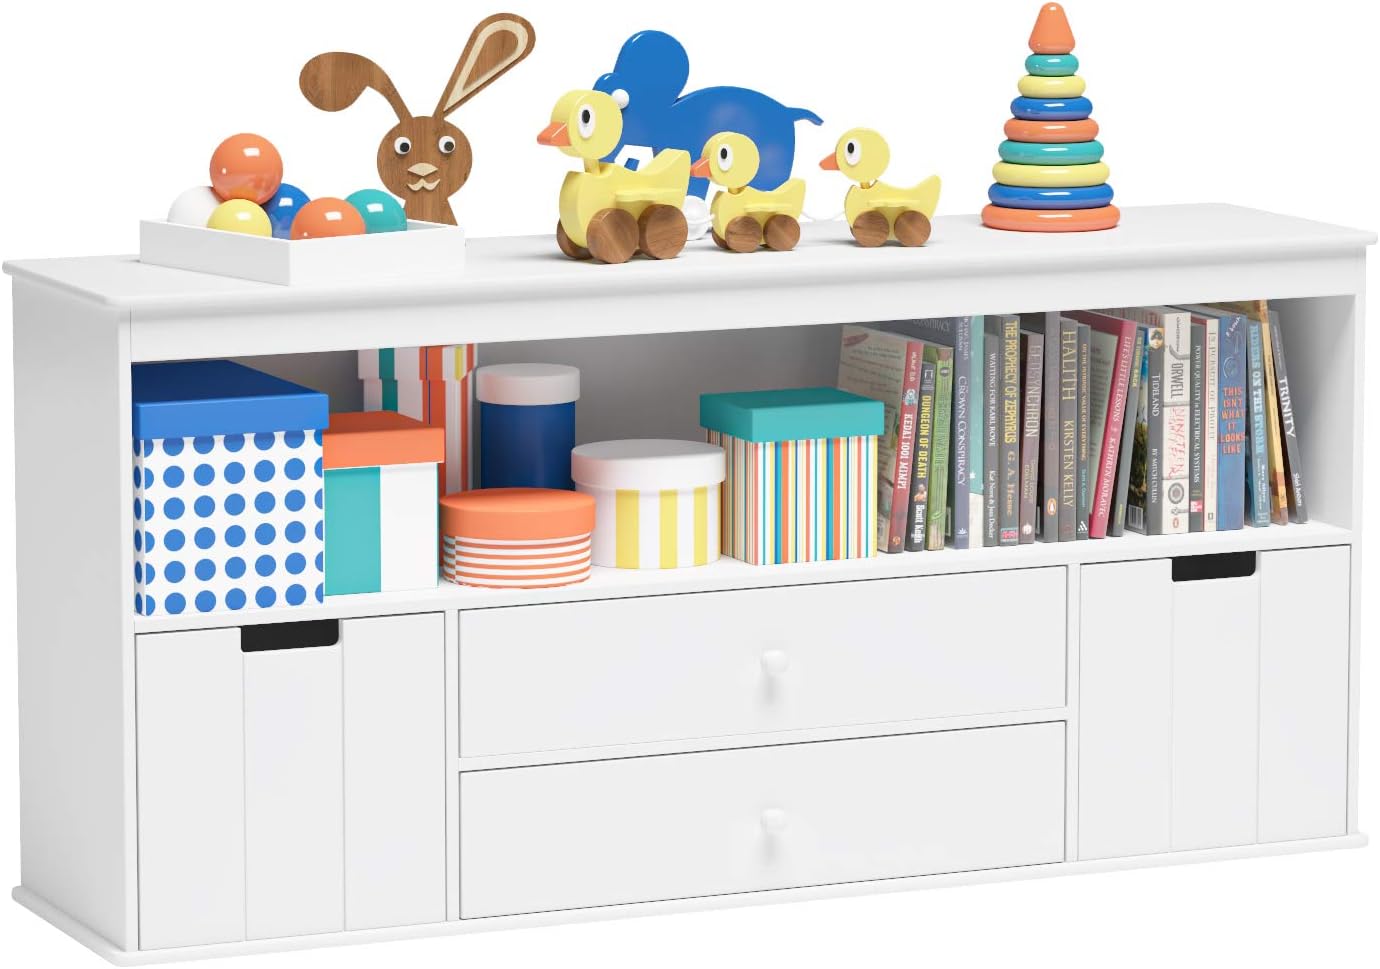 Timy 51.9" Toy Storage Organizer with 2 Drawers, Wooden Toy Organizer Bins, Kids Bookshelf for Reading, Storing, Playing, White